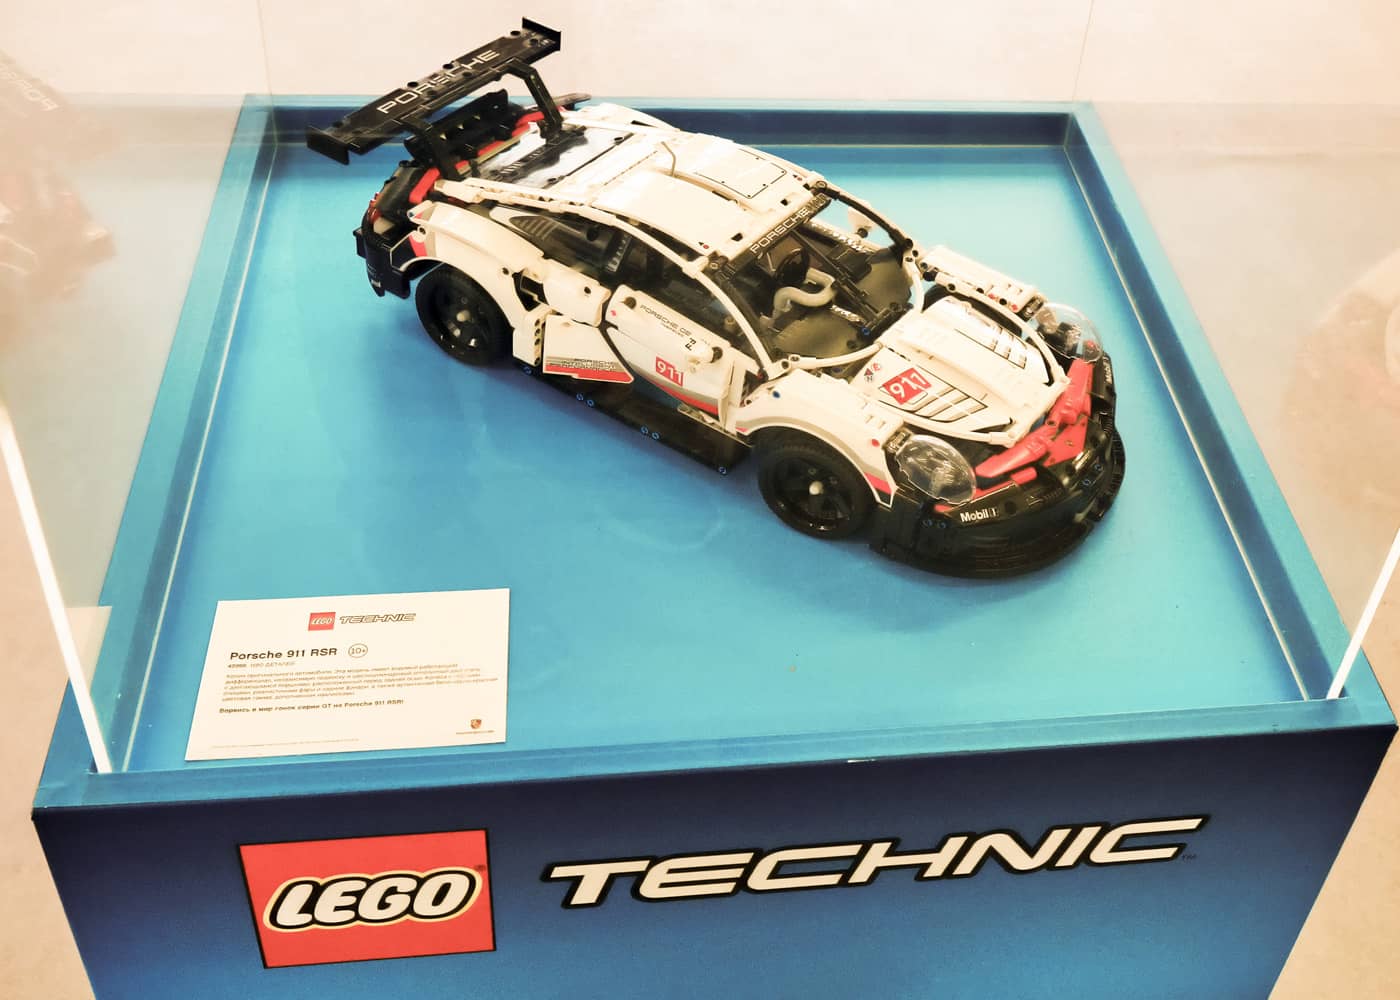 LEGO TECHNIC toys